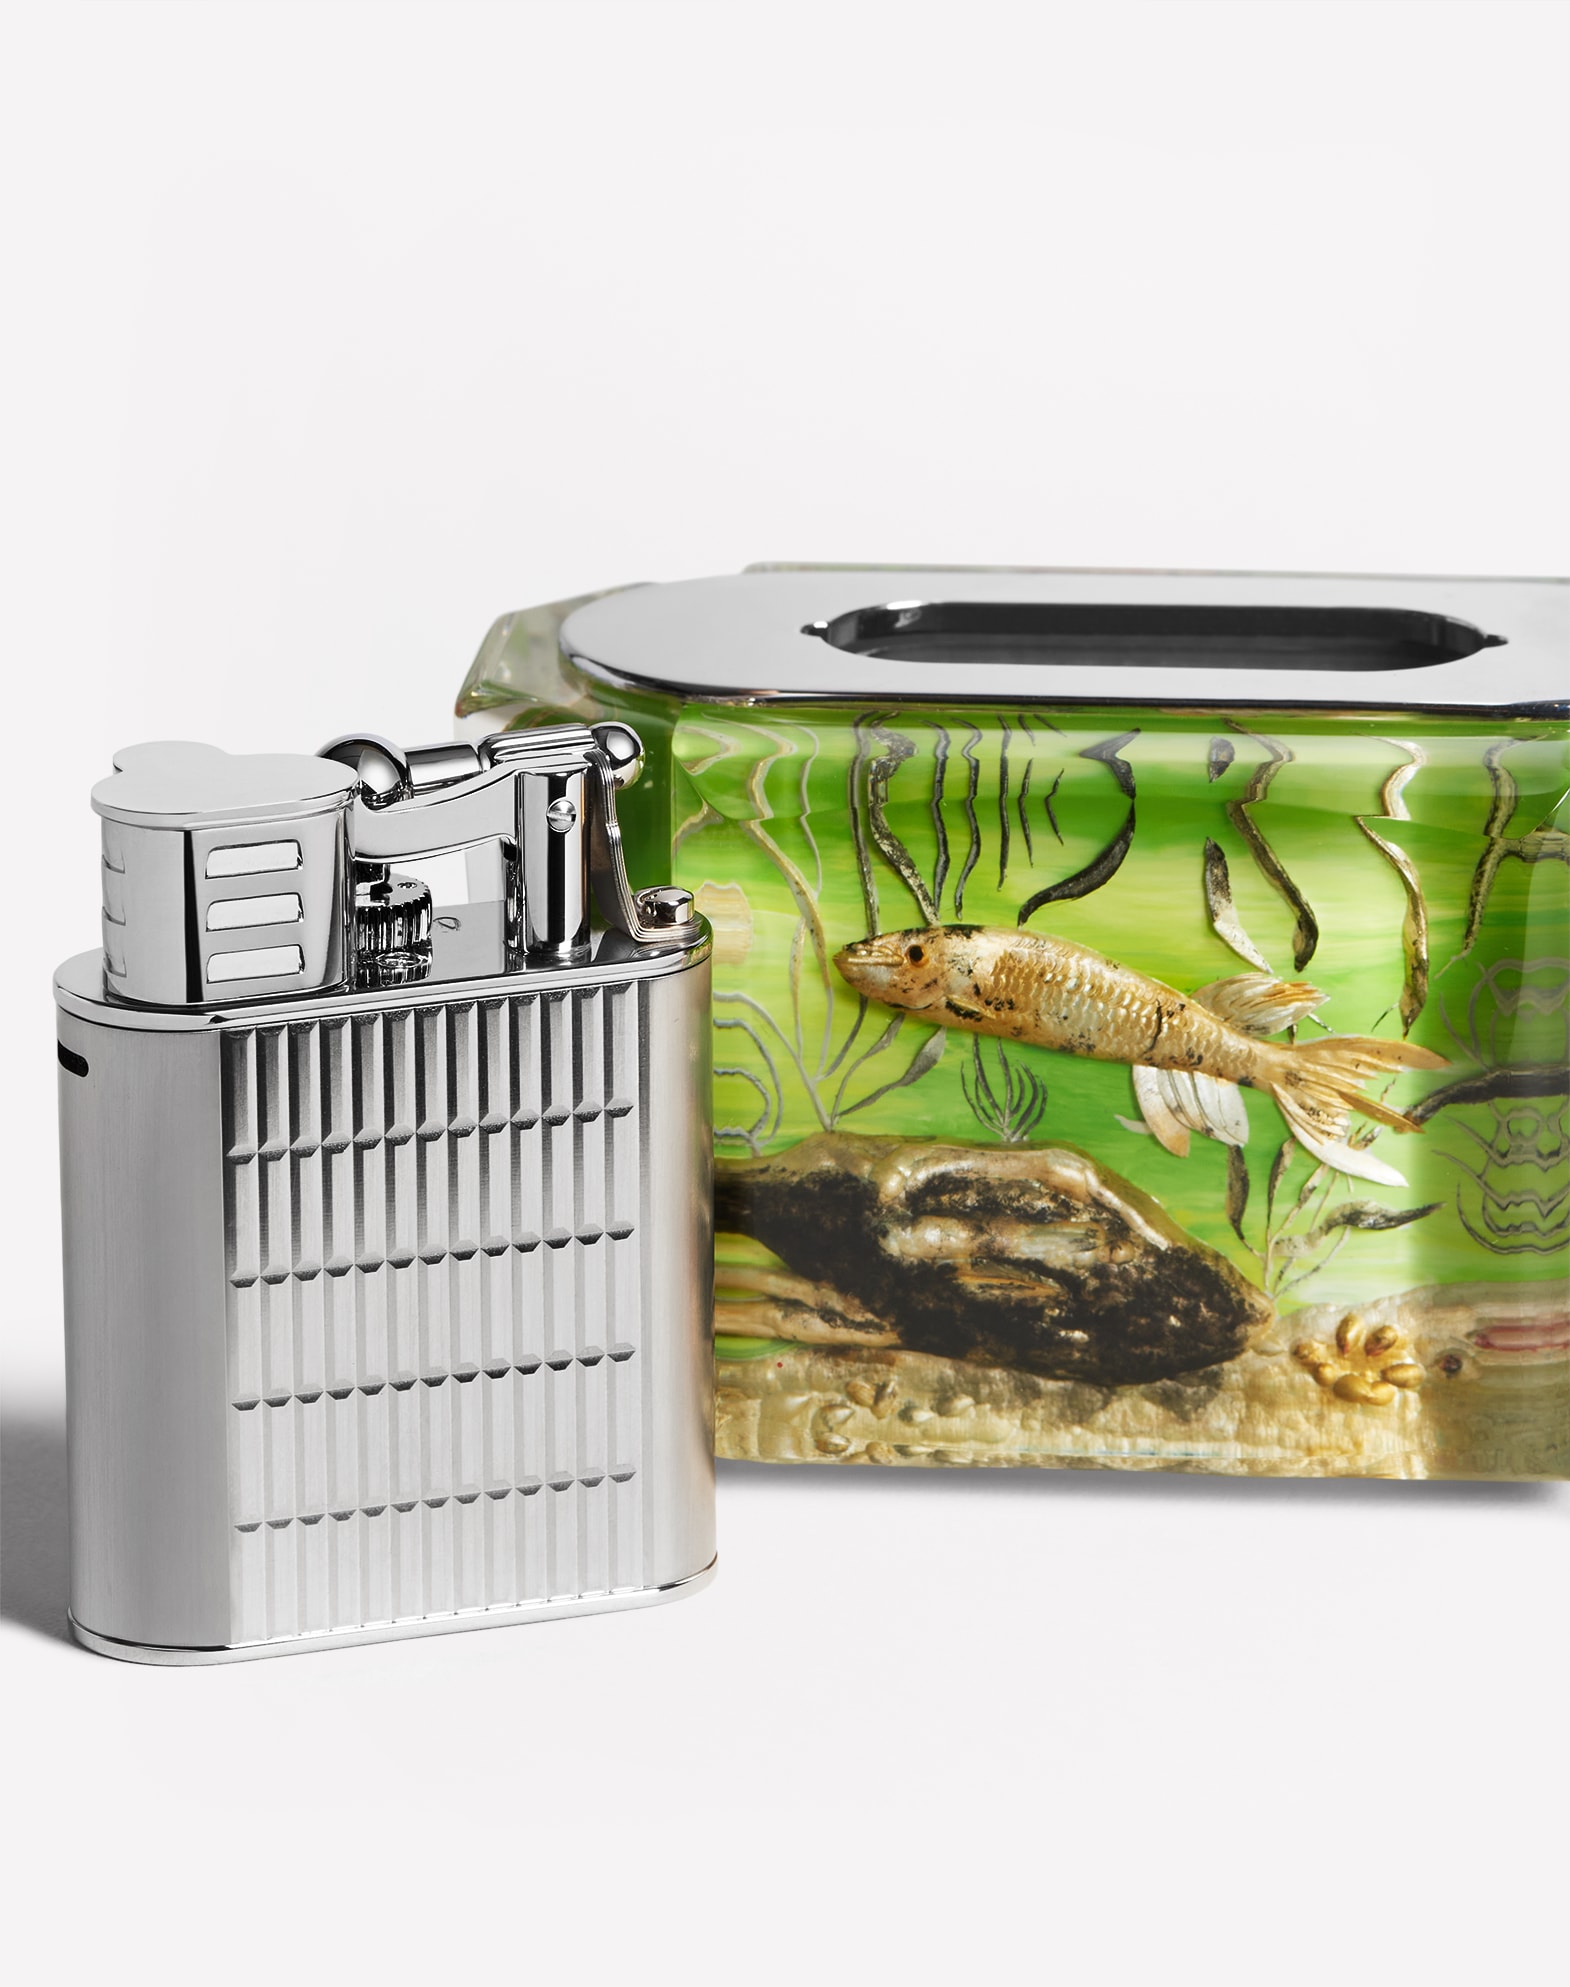 dunhill 推出全新 Aquarium 台式打火机